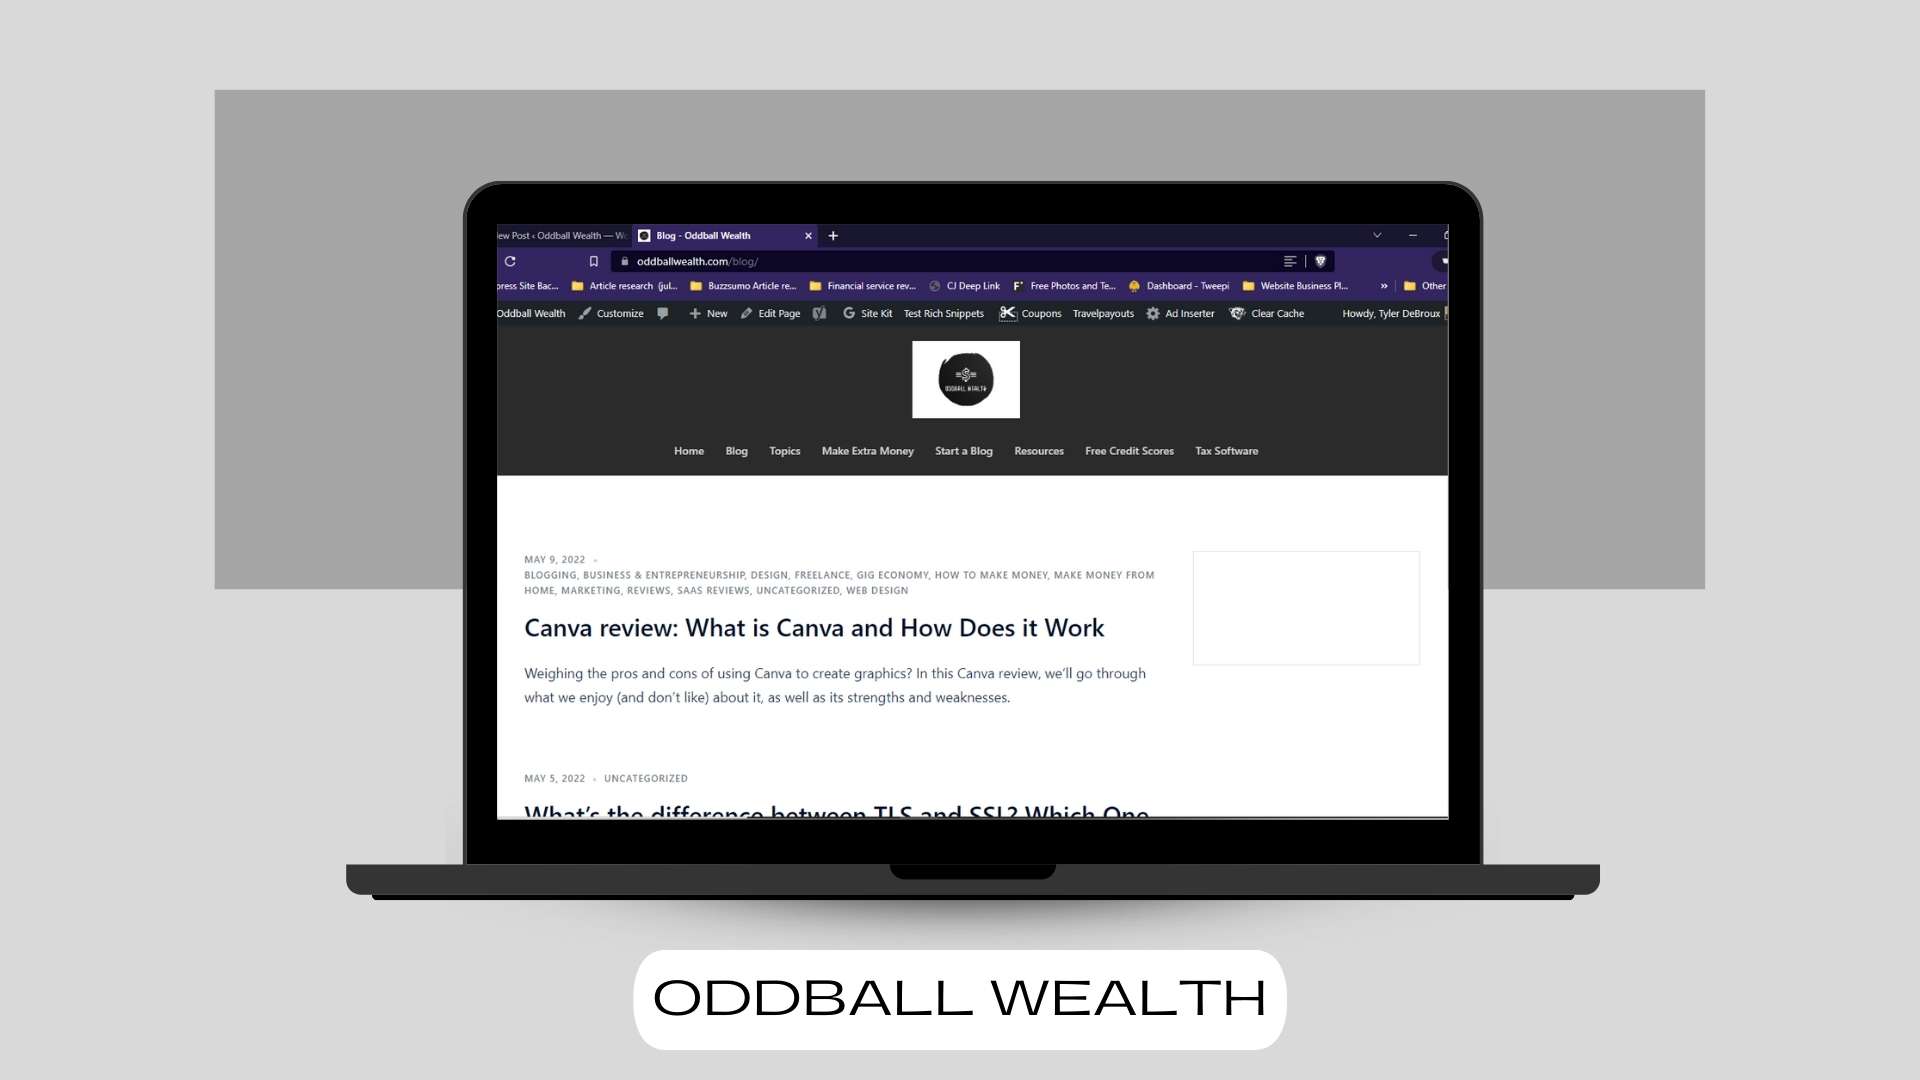 OddballWealth.com article feature image